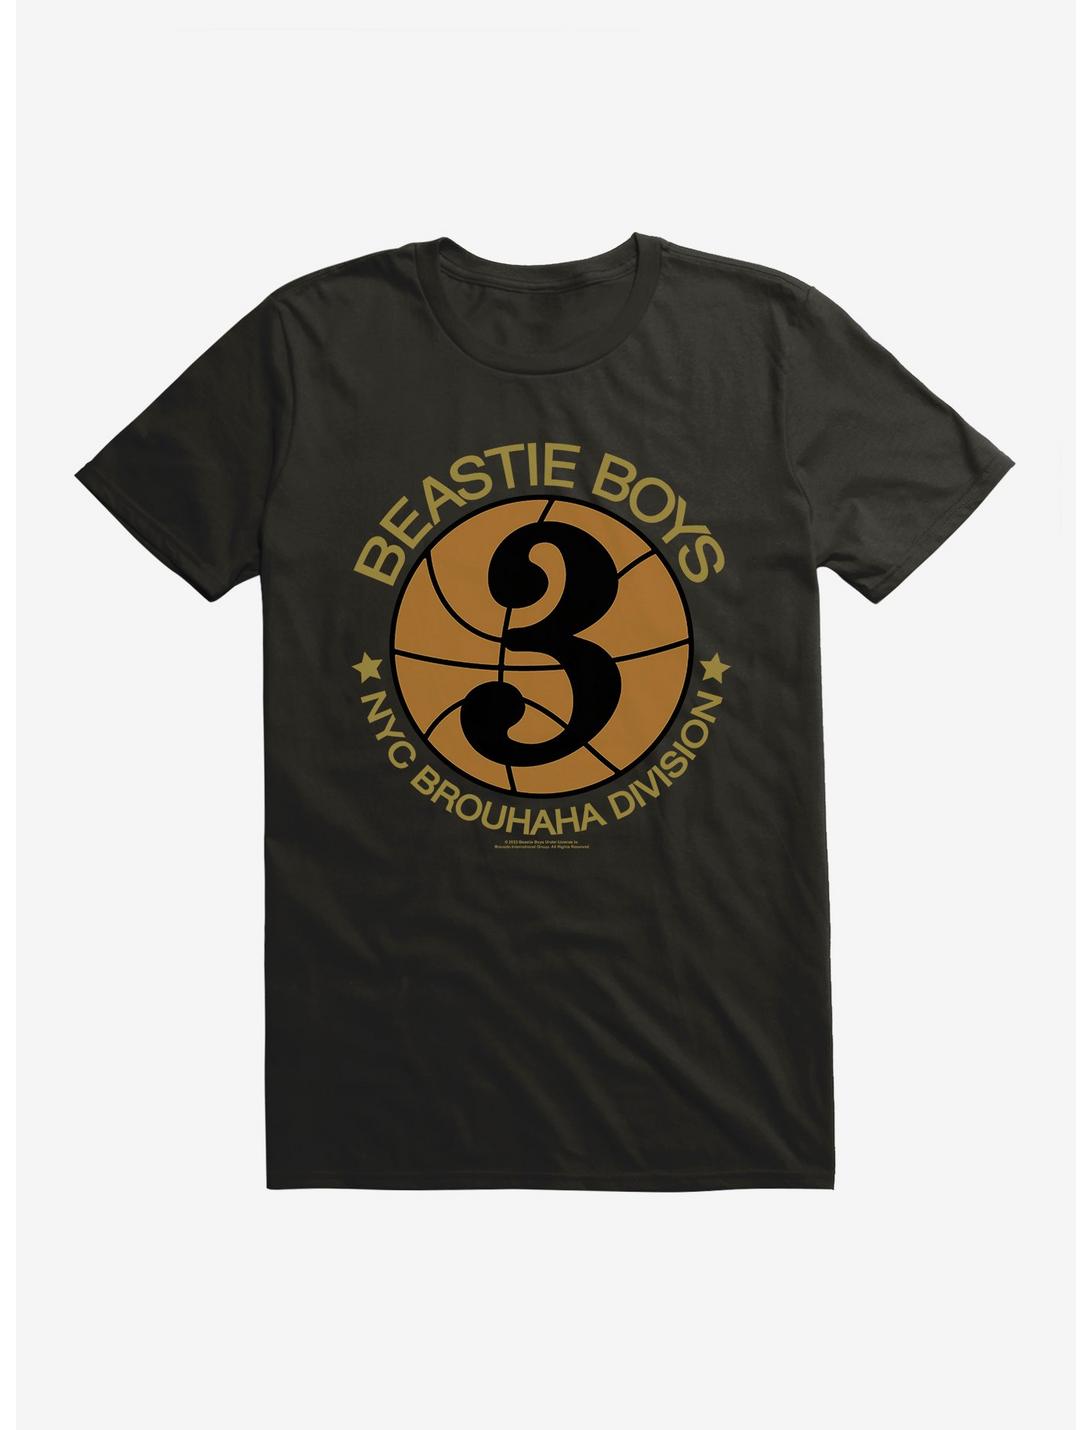 Beastie Boys NYC Brouhaha Division T-Shirt, BLACK, hi-res